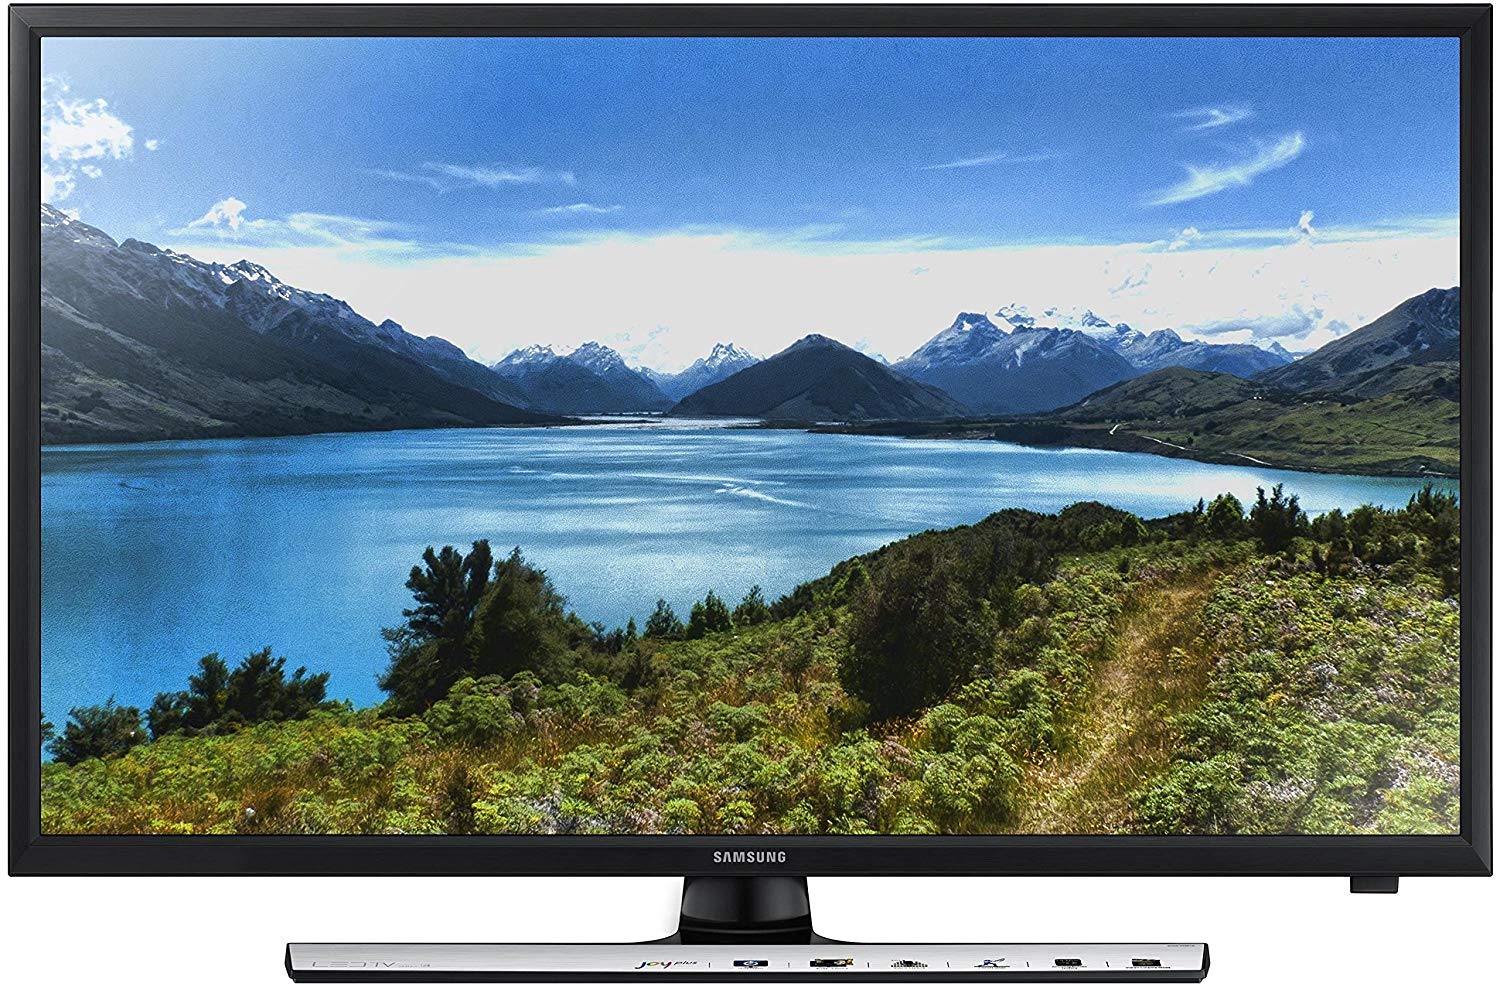 Samsung 24K4100 HD Ready LED TV